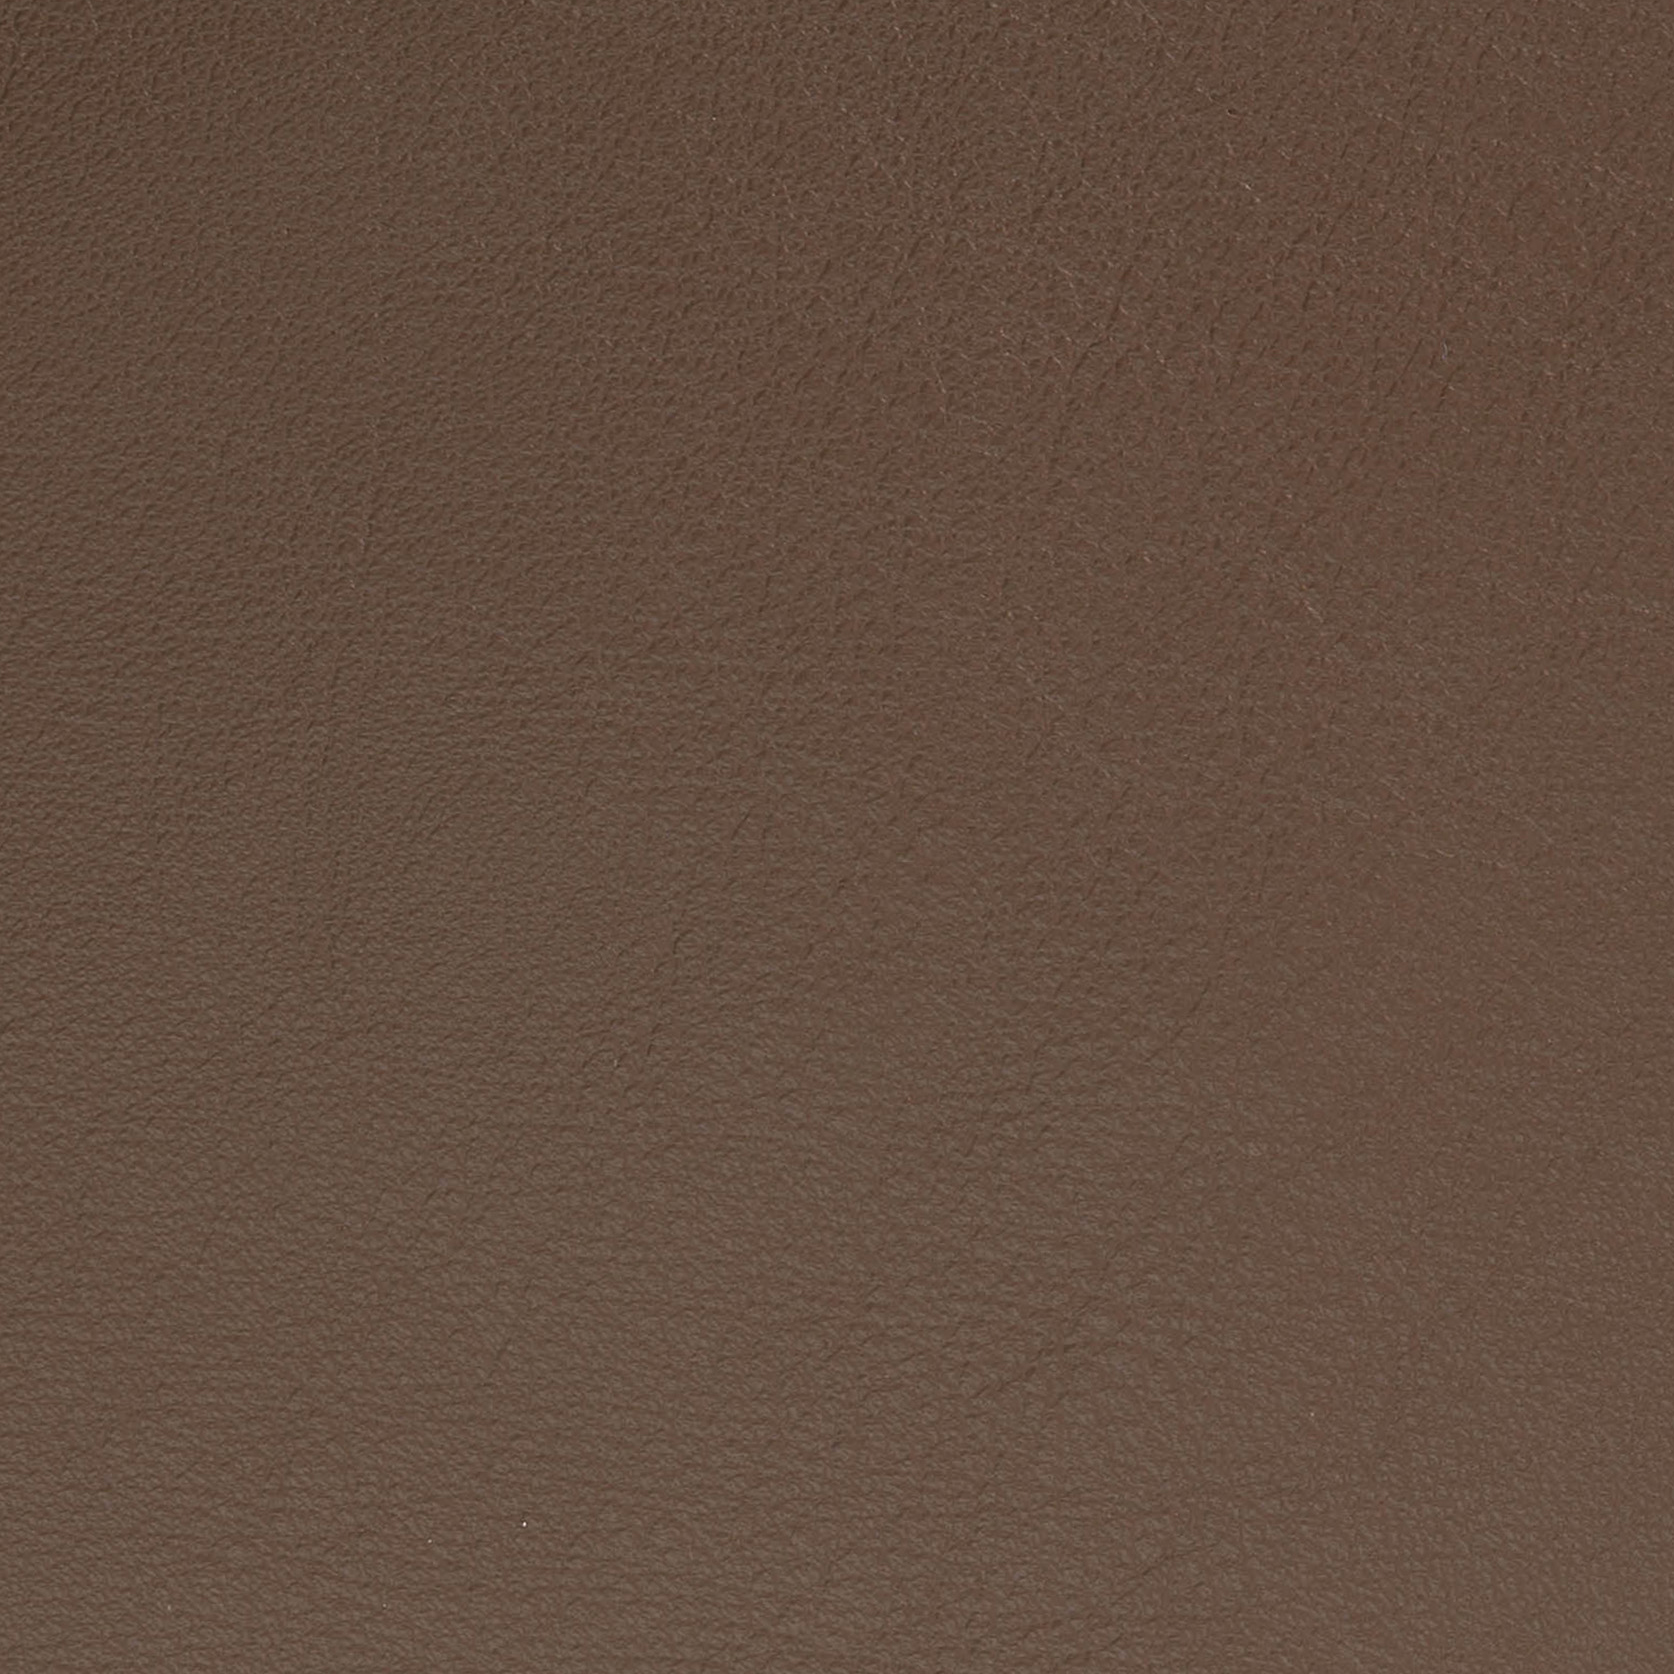 Elmosoft Leather Cocoa Brown